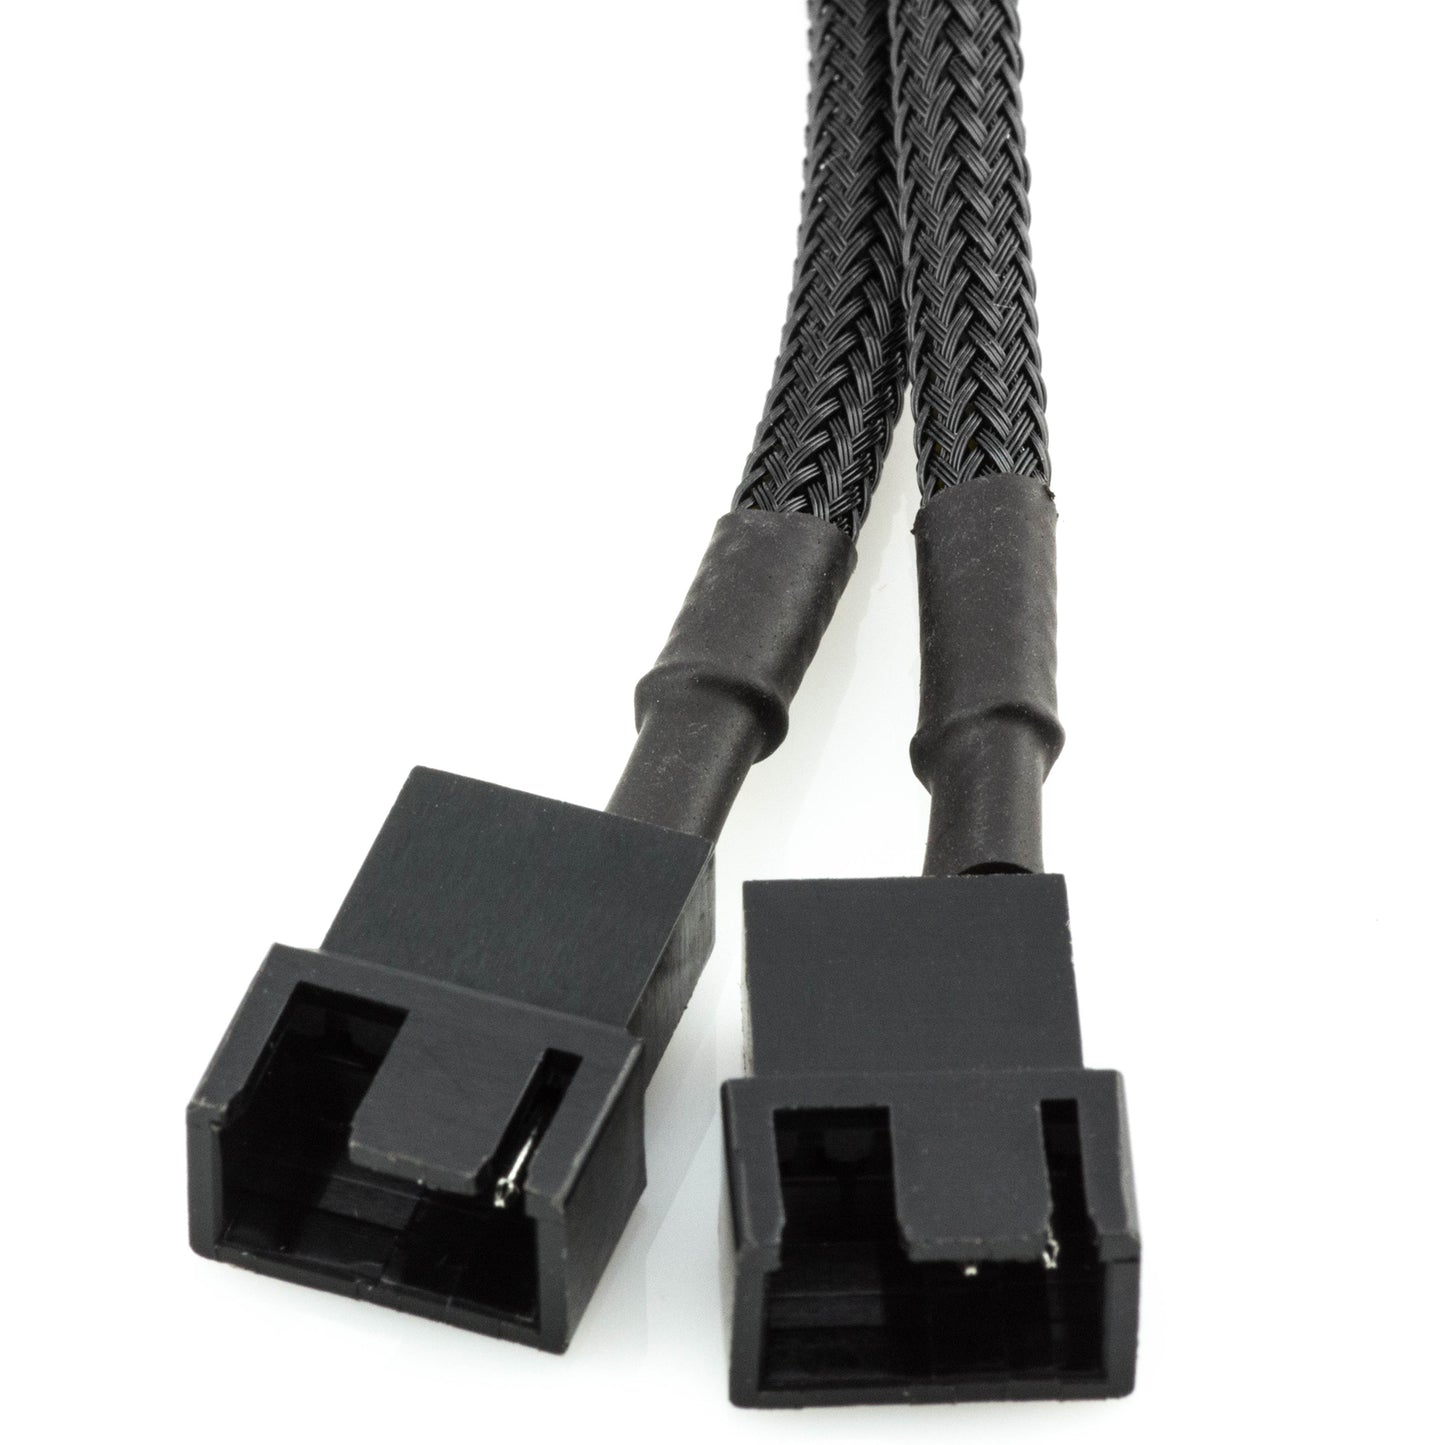 15-Pin SATA to Dual 4-Pin Fan 12V Power Adapter Cable